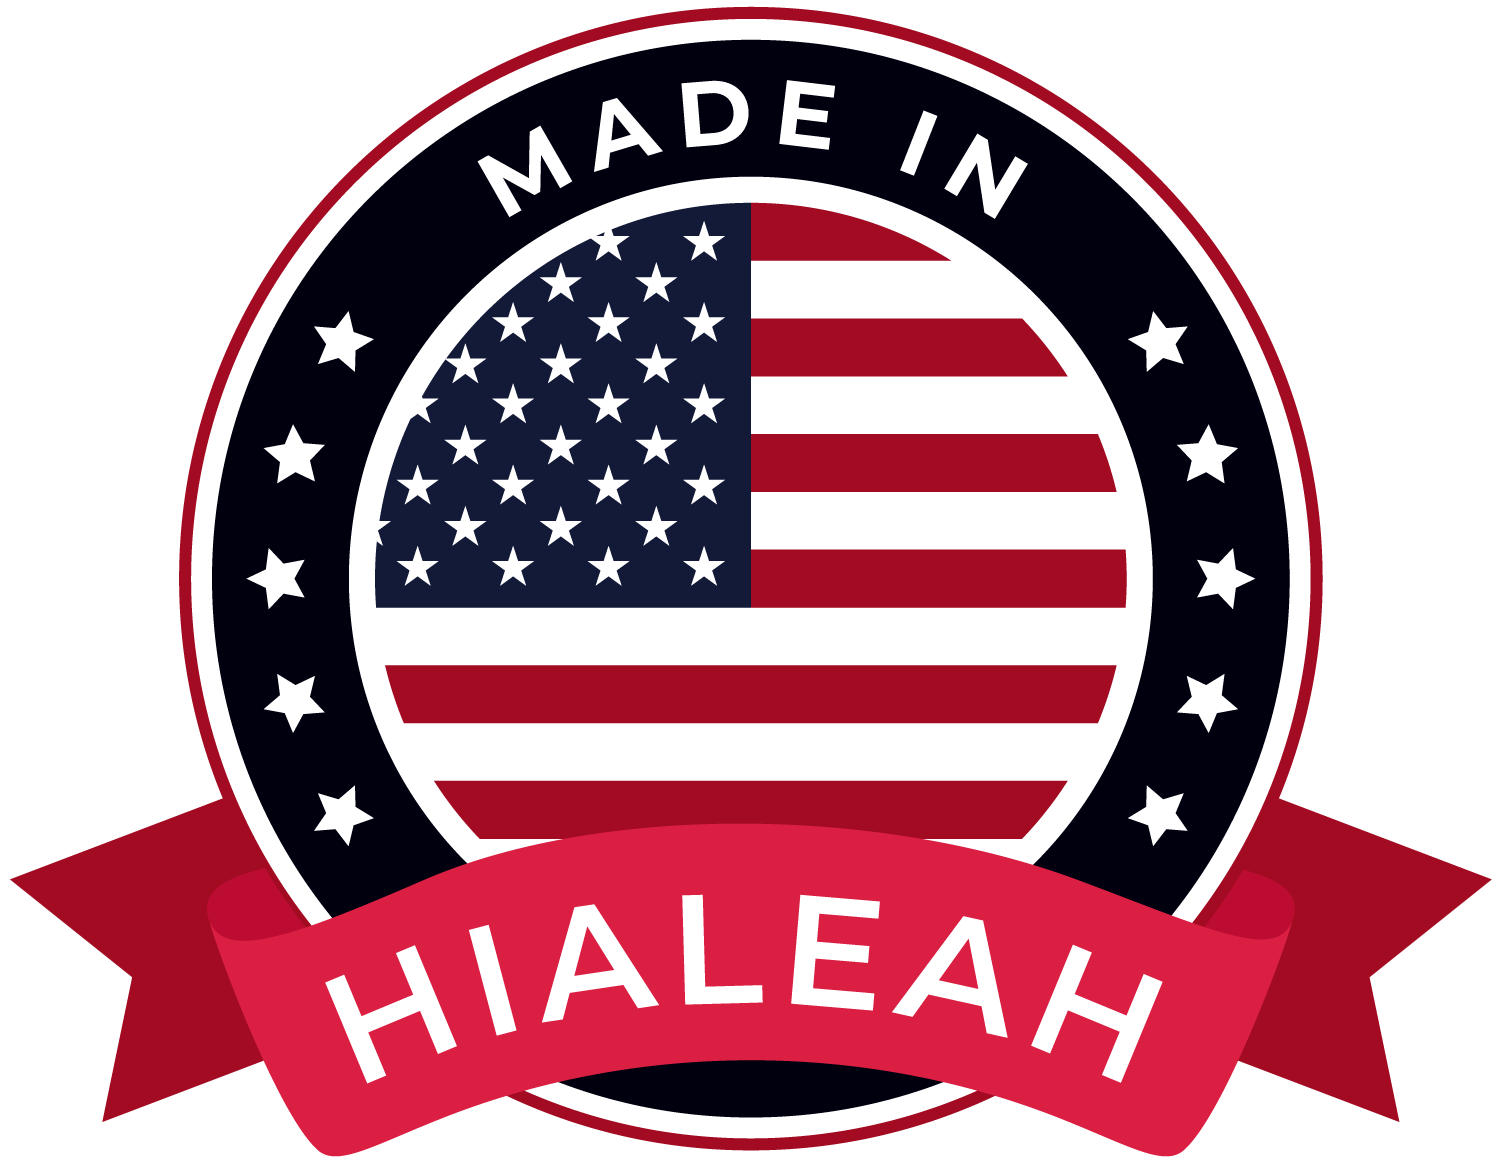 made in hialeah